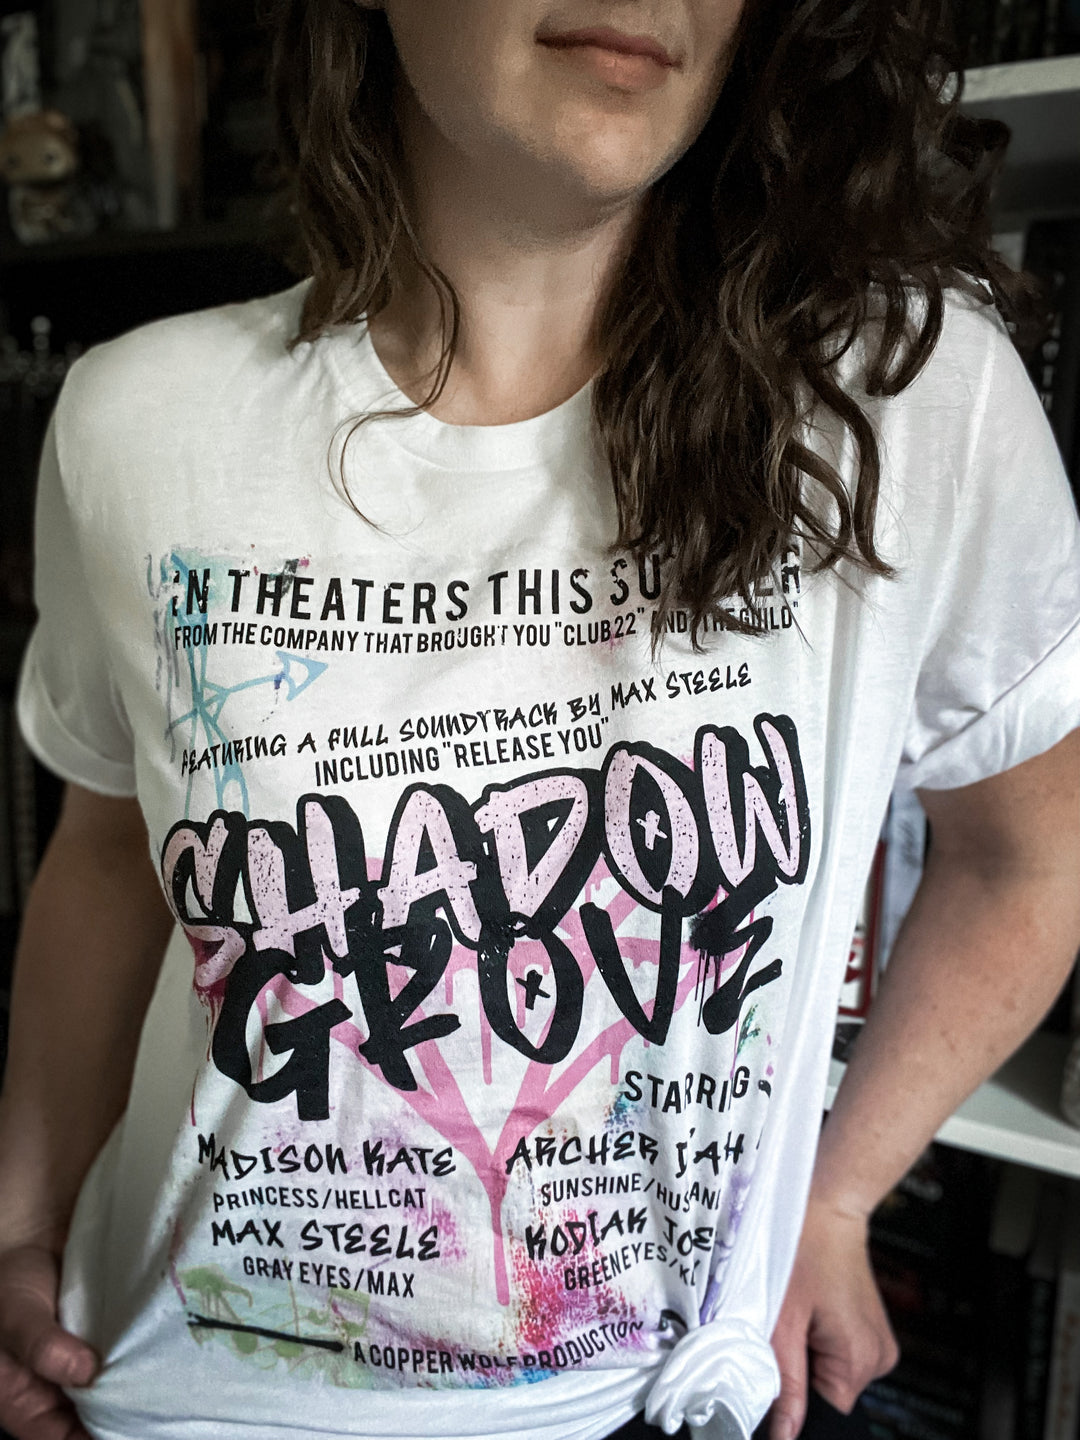 Tate James- Shadow Grove Póster Camiseta unisex